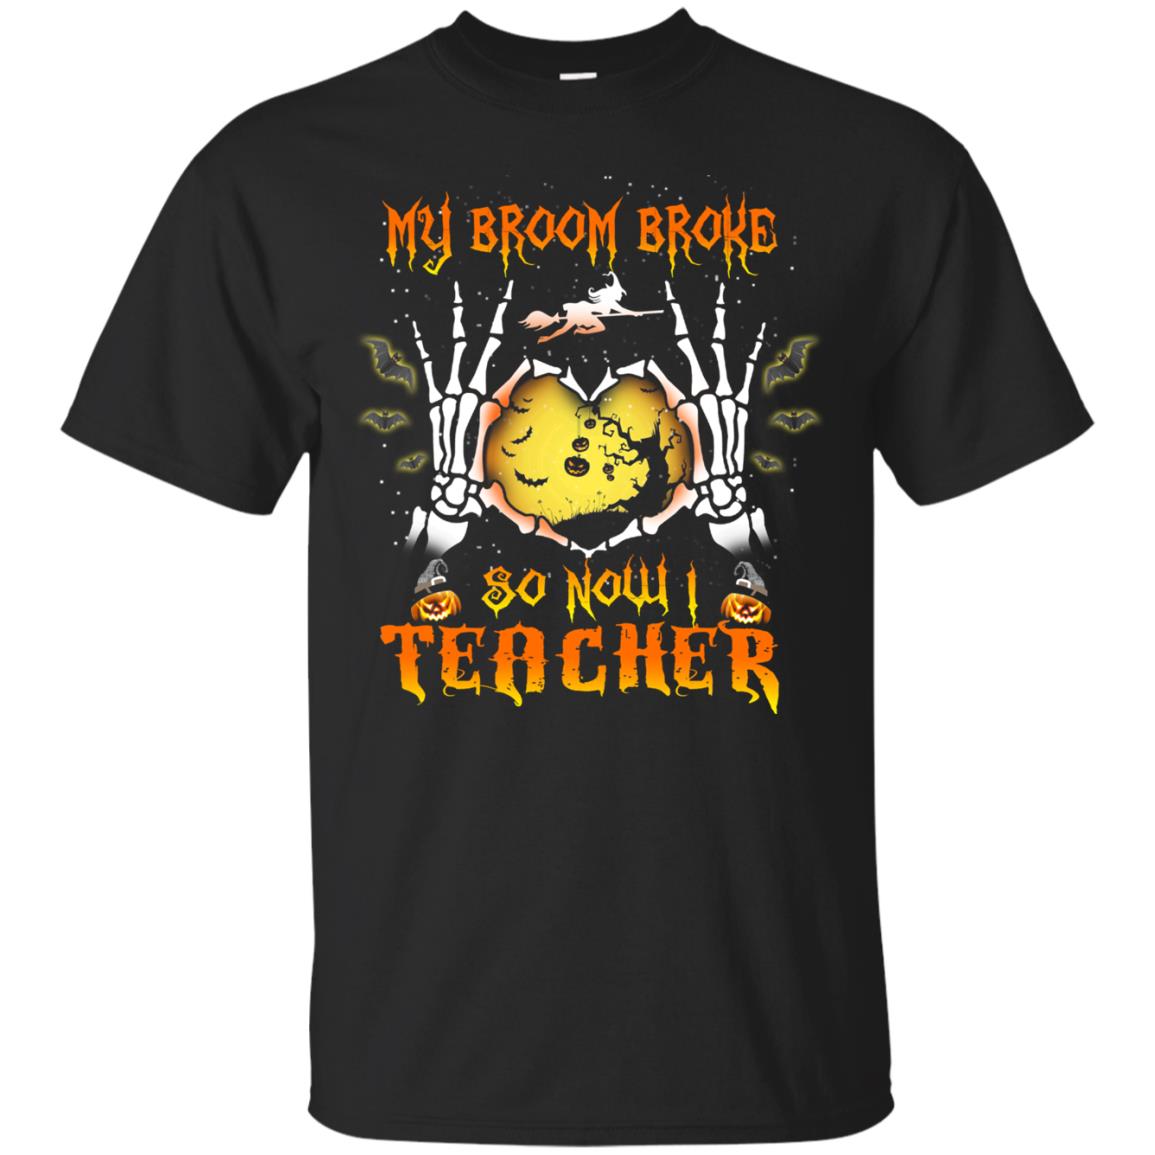 My broom broke so now I Teacher shirt, hoodie, tank